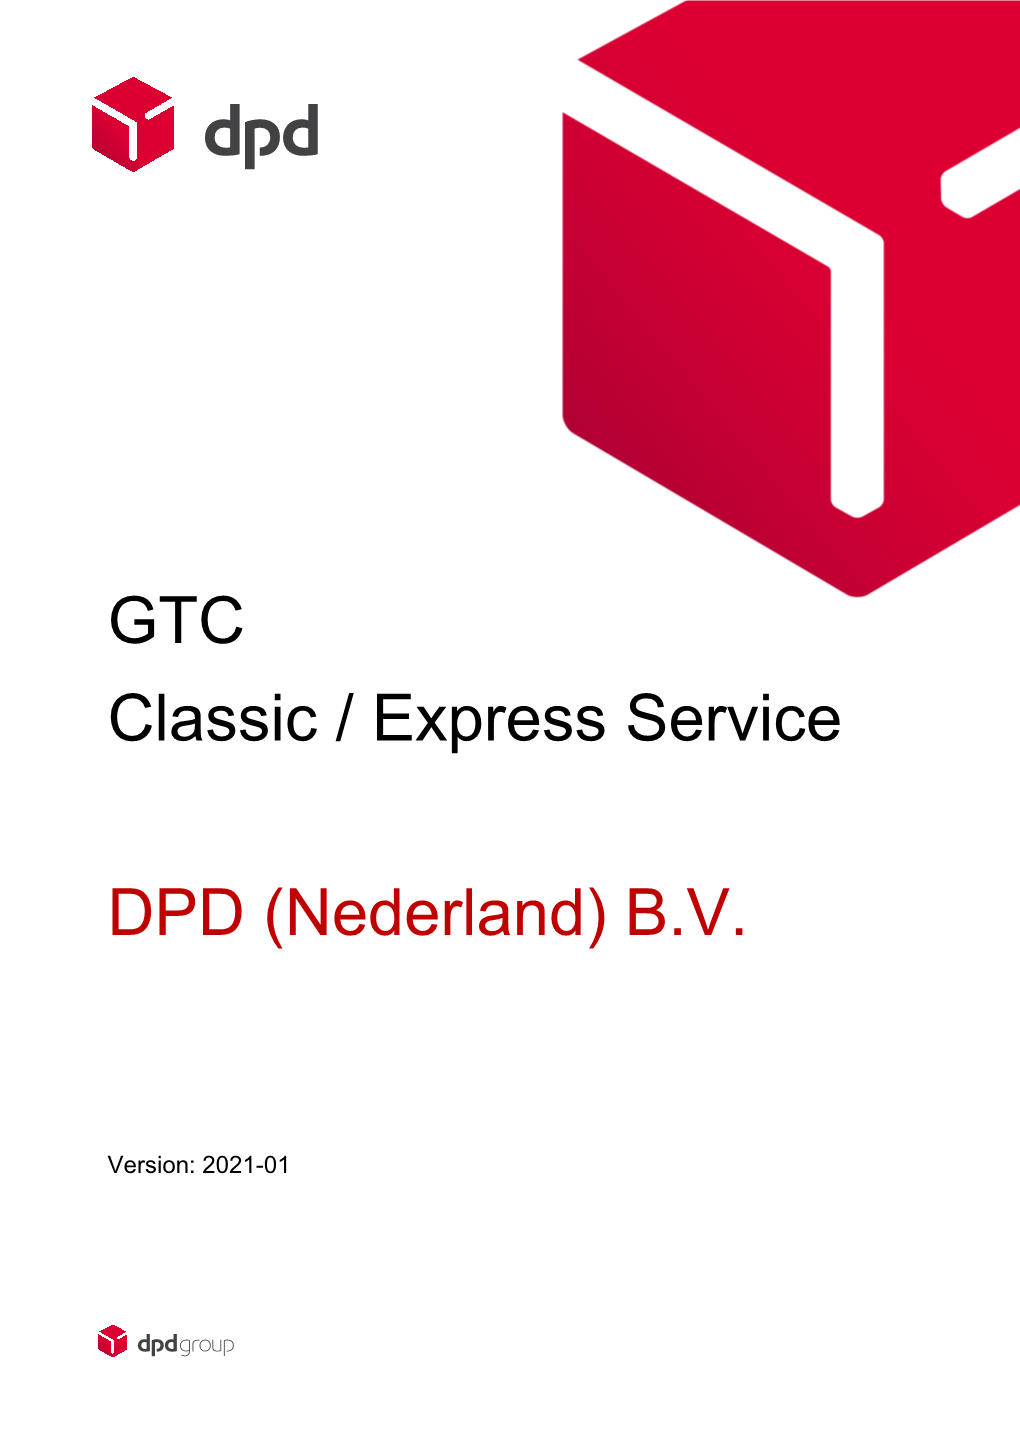 GTC Classic / Express Service DPD (Nederland) B.V